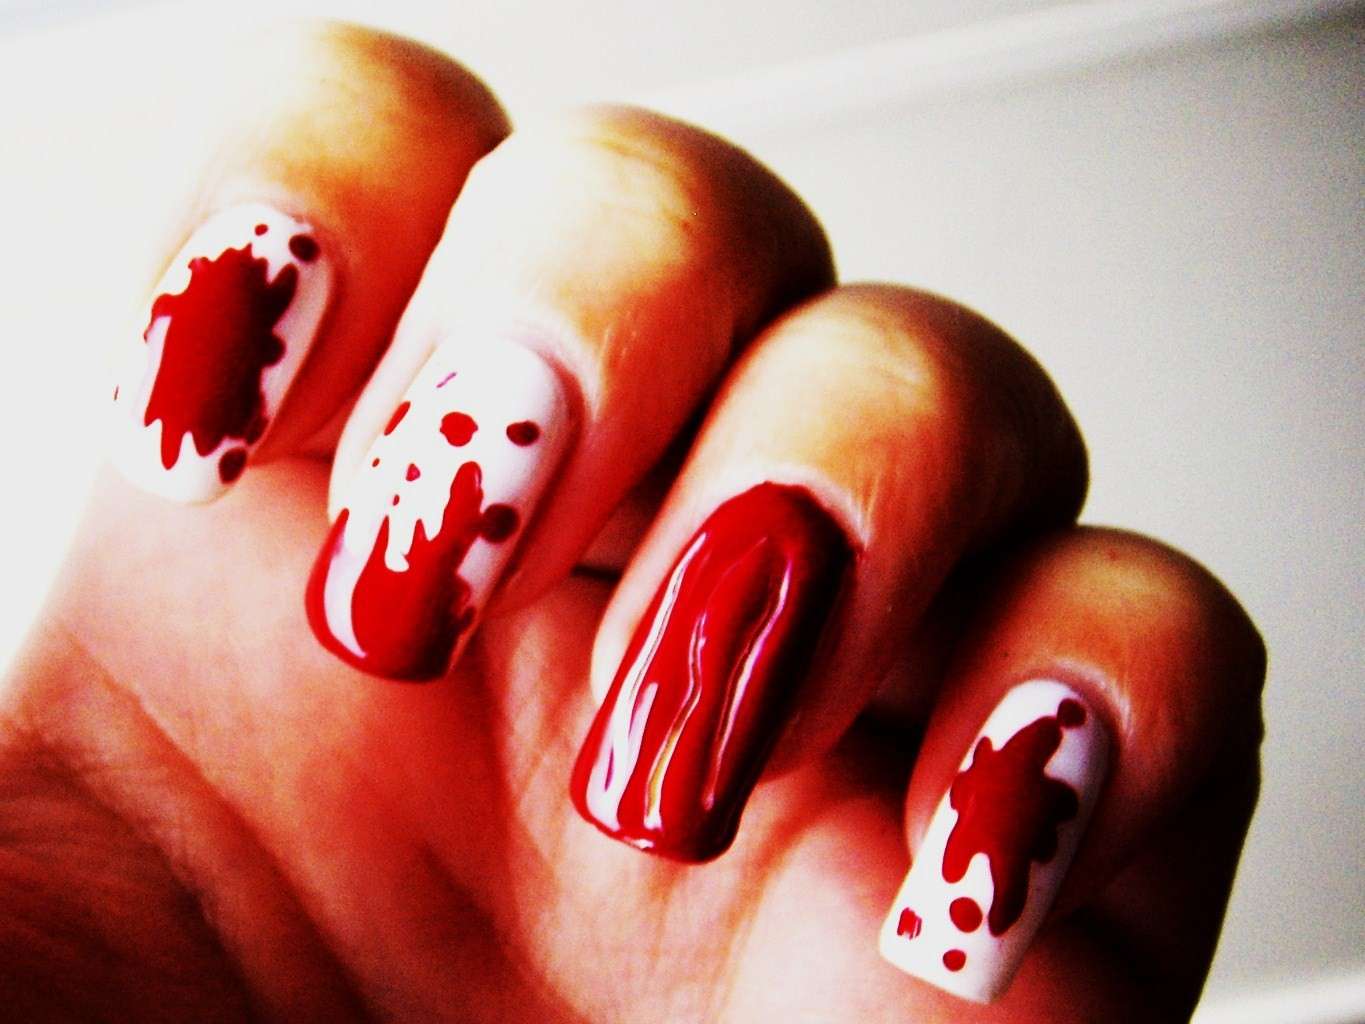 Nail art di ispirazione vampiresca